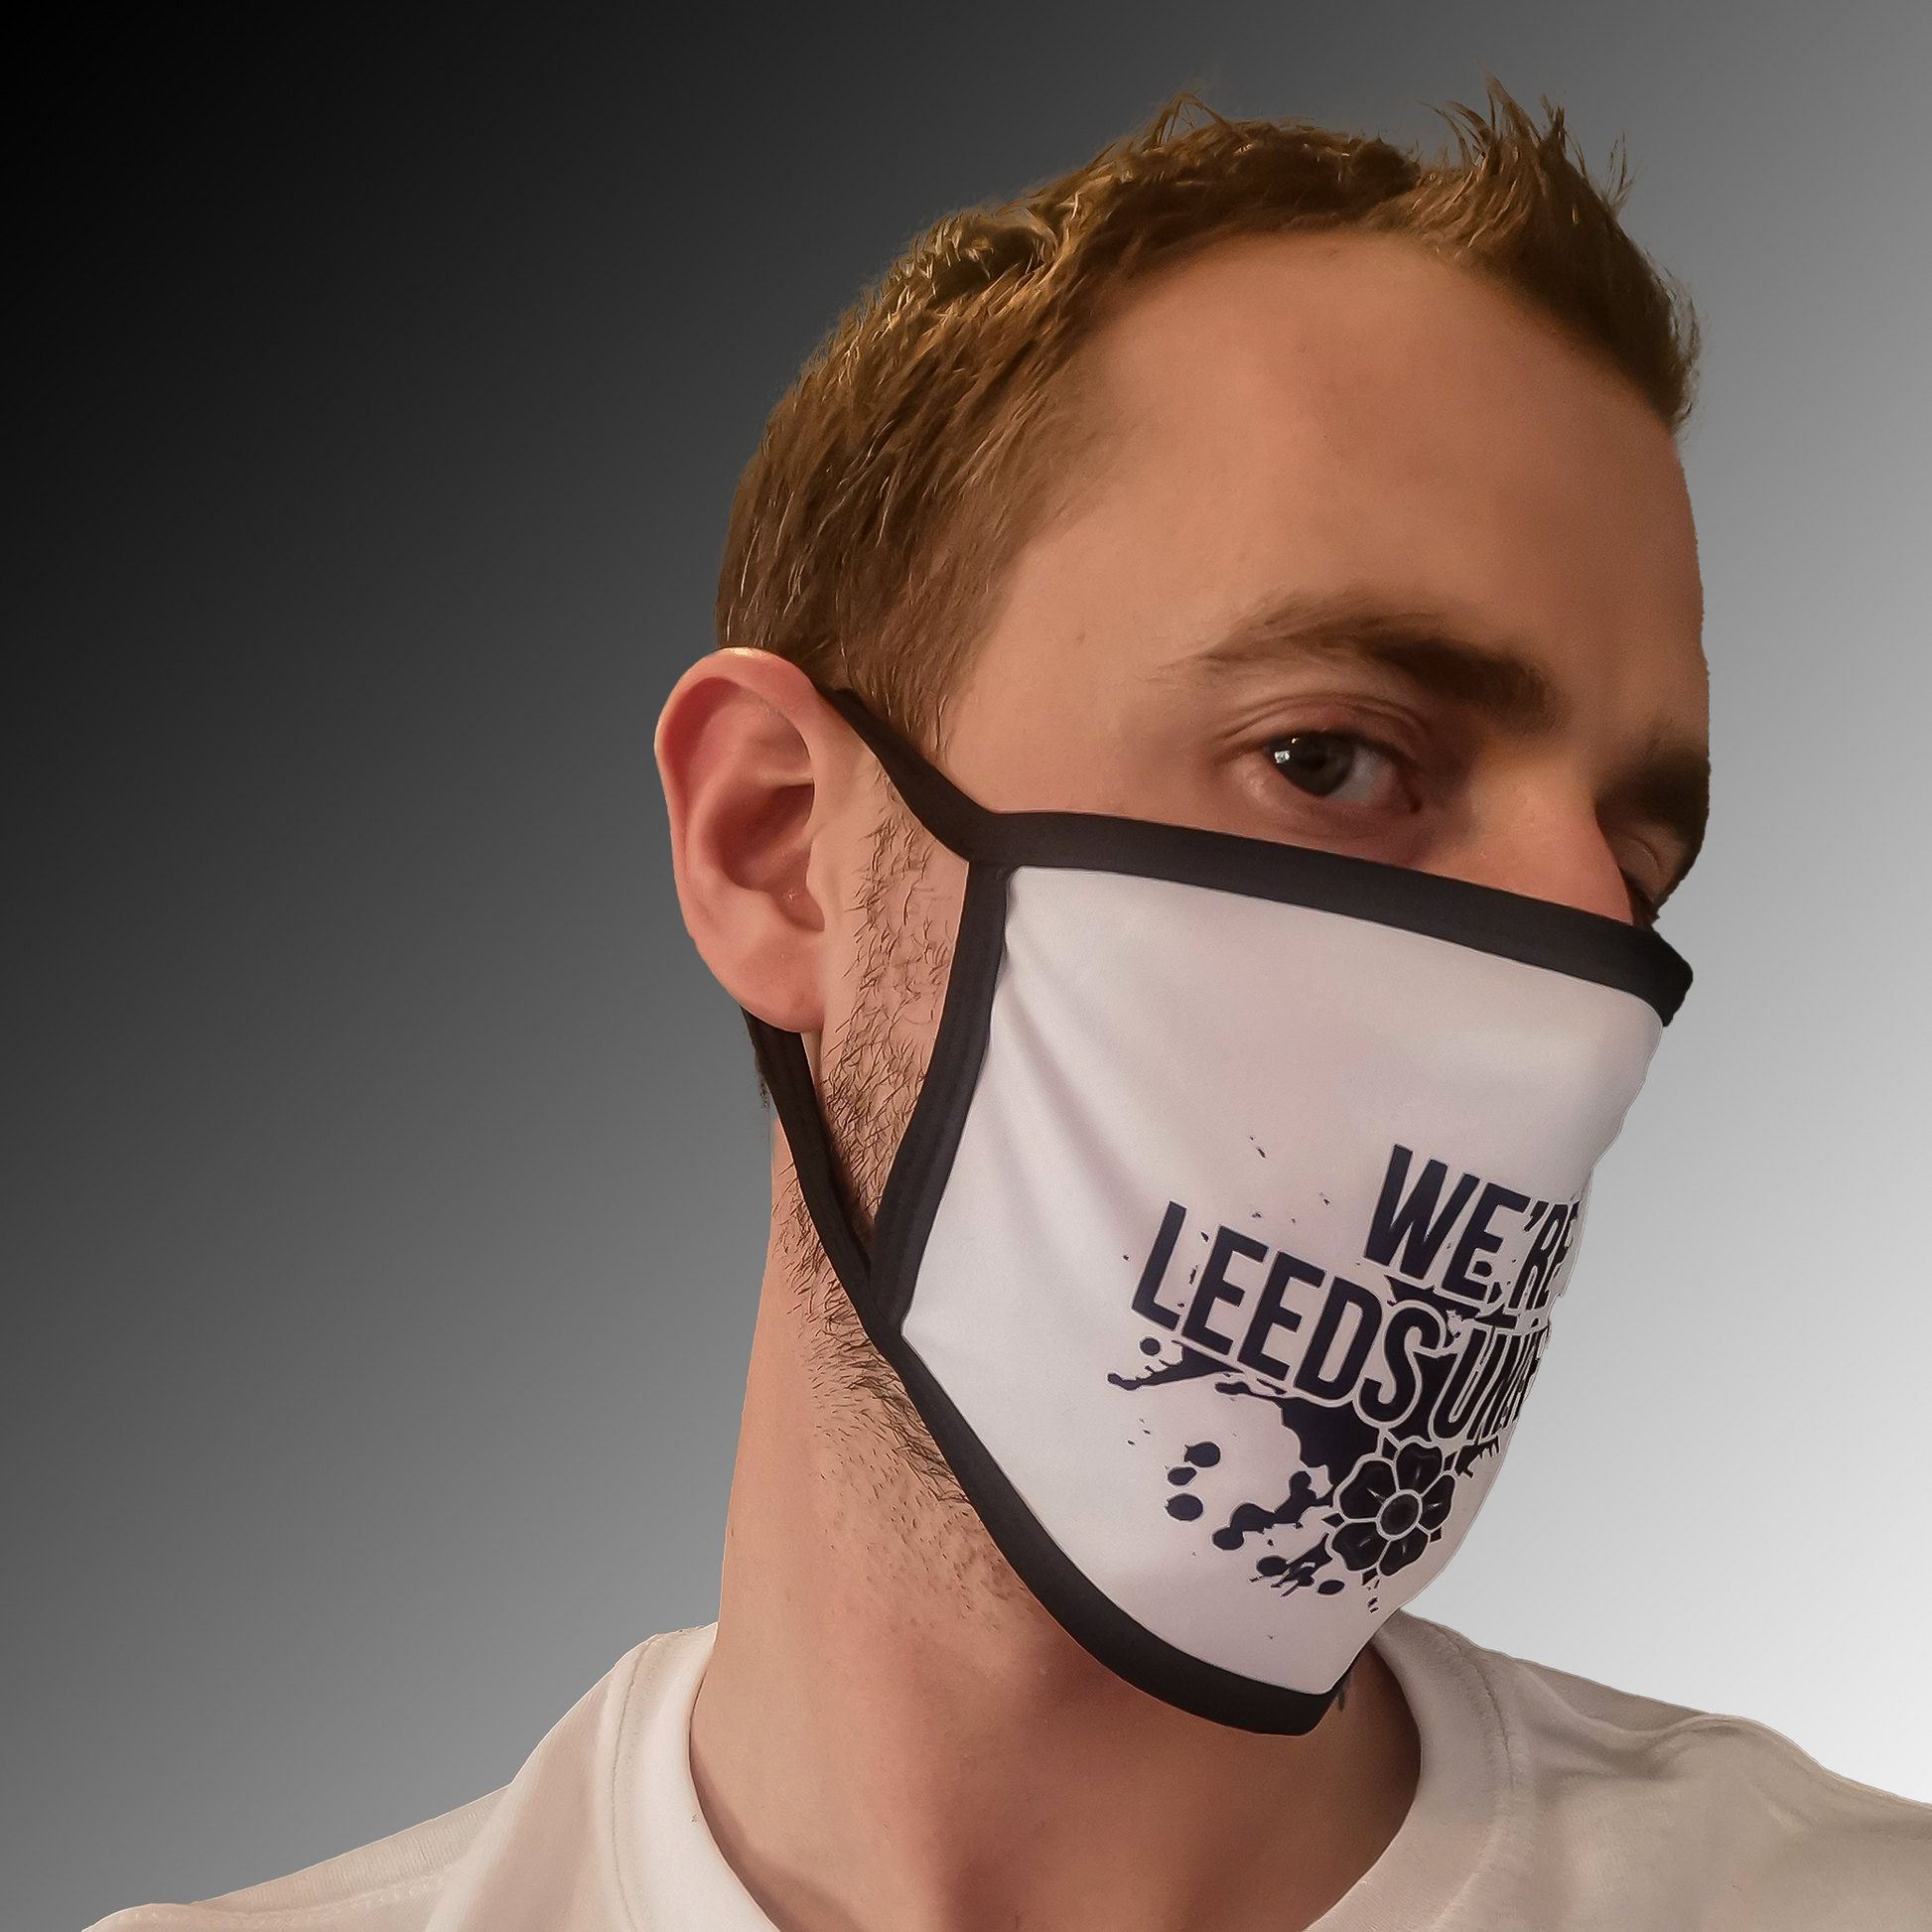 We Are Leeds United Mask